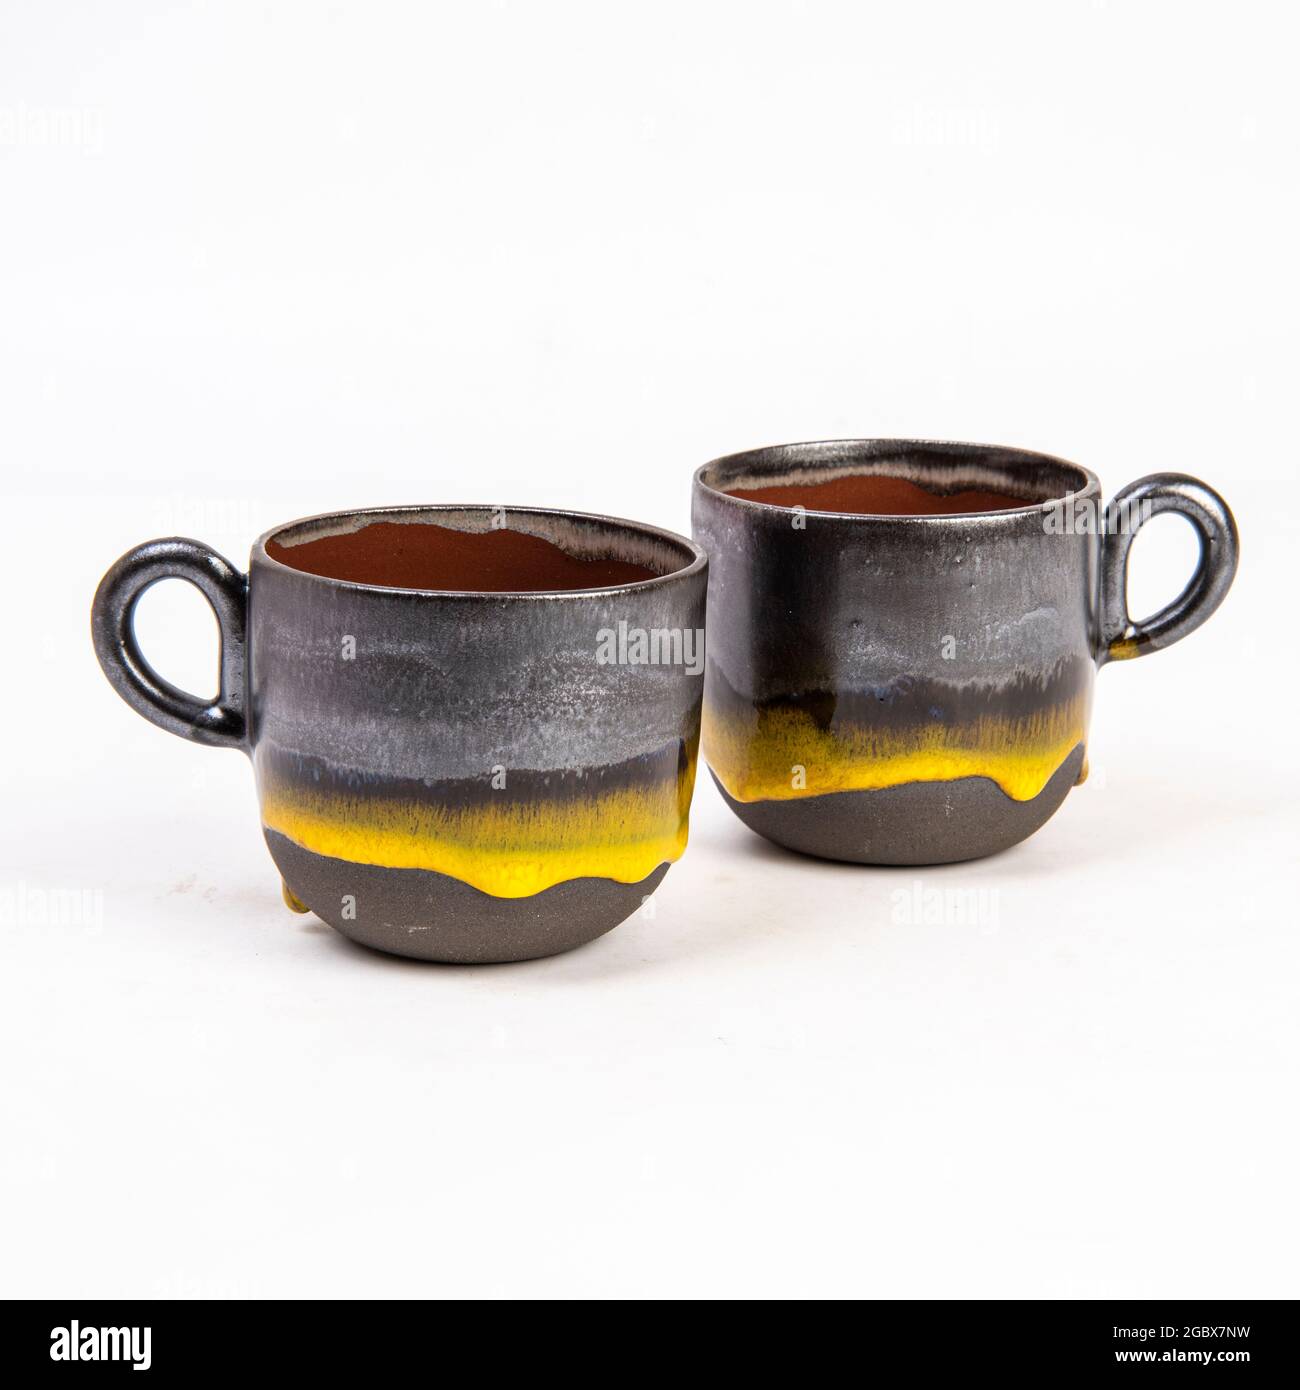 https://c8.alamy.com/comp/2GBX7NW/handmade-ceramic-coffee-mugs-isolated-on-white-background-2GBX7NW.jpg